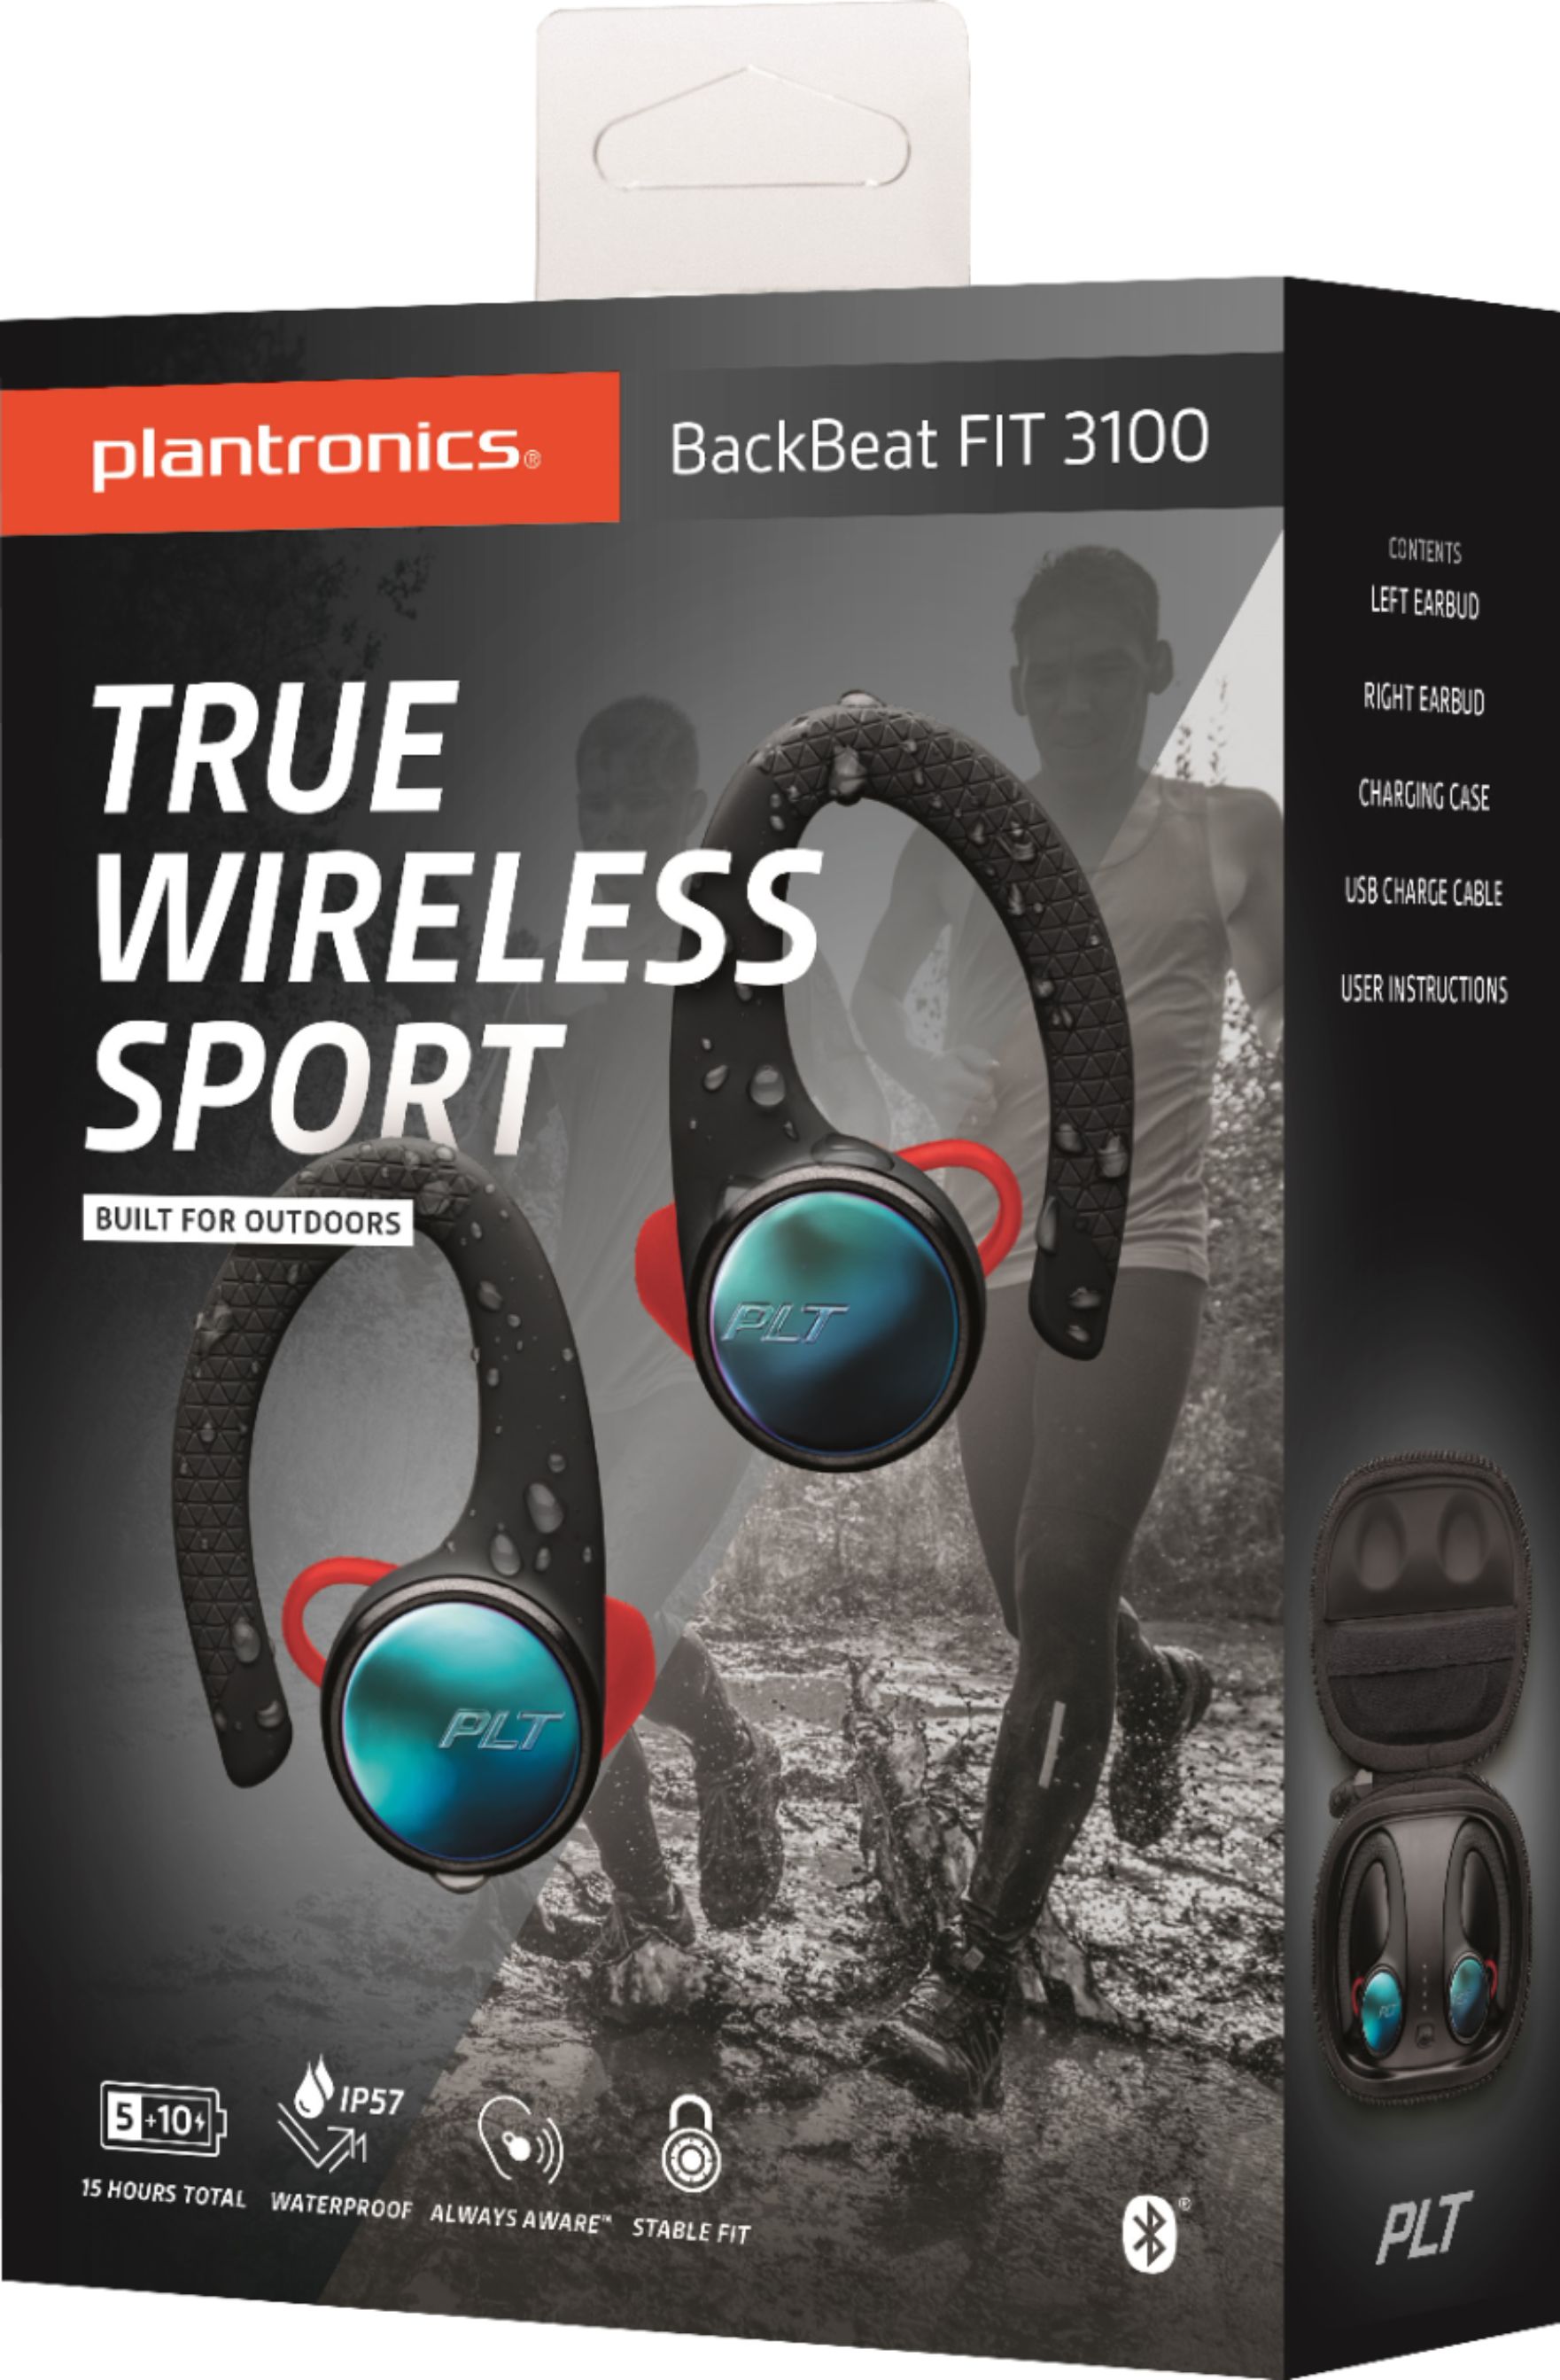 plantronics backbeat fit 3100 bluetooth